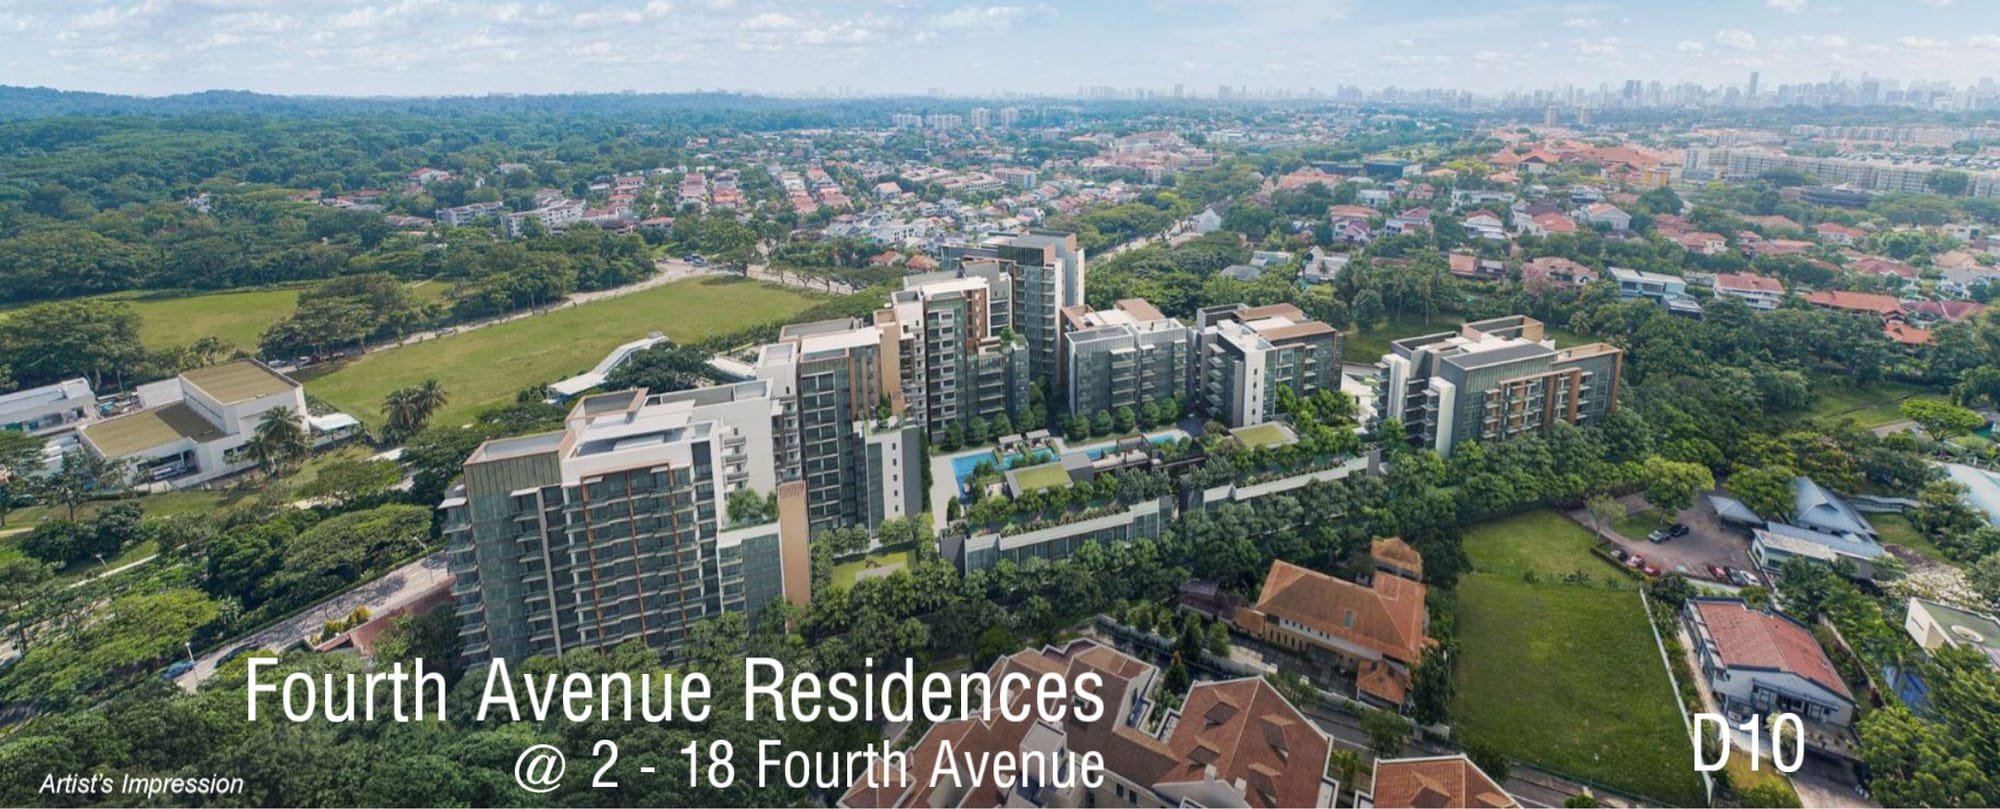 D10 Fourth Avenue Residences